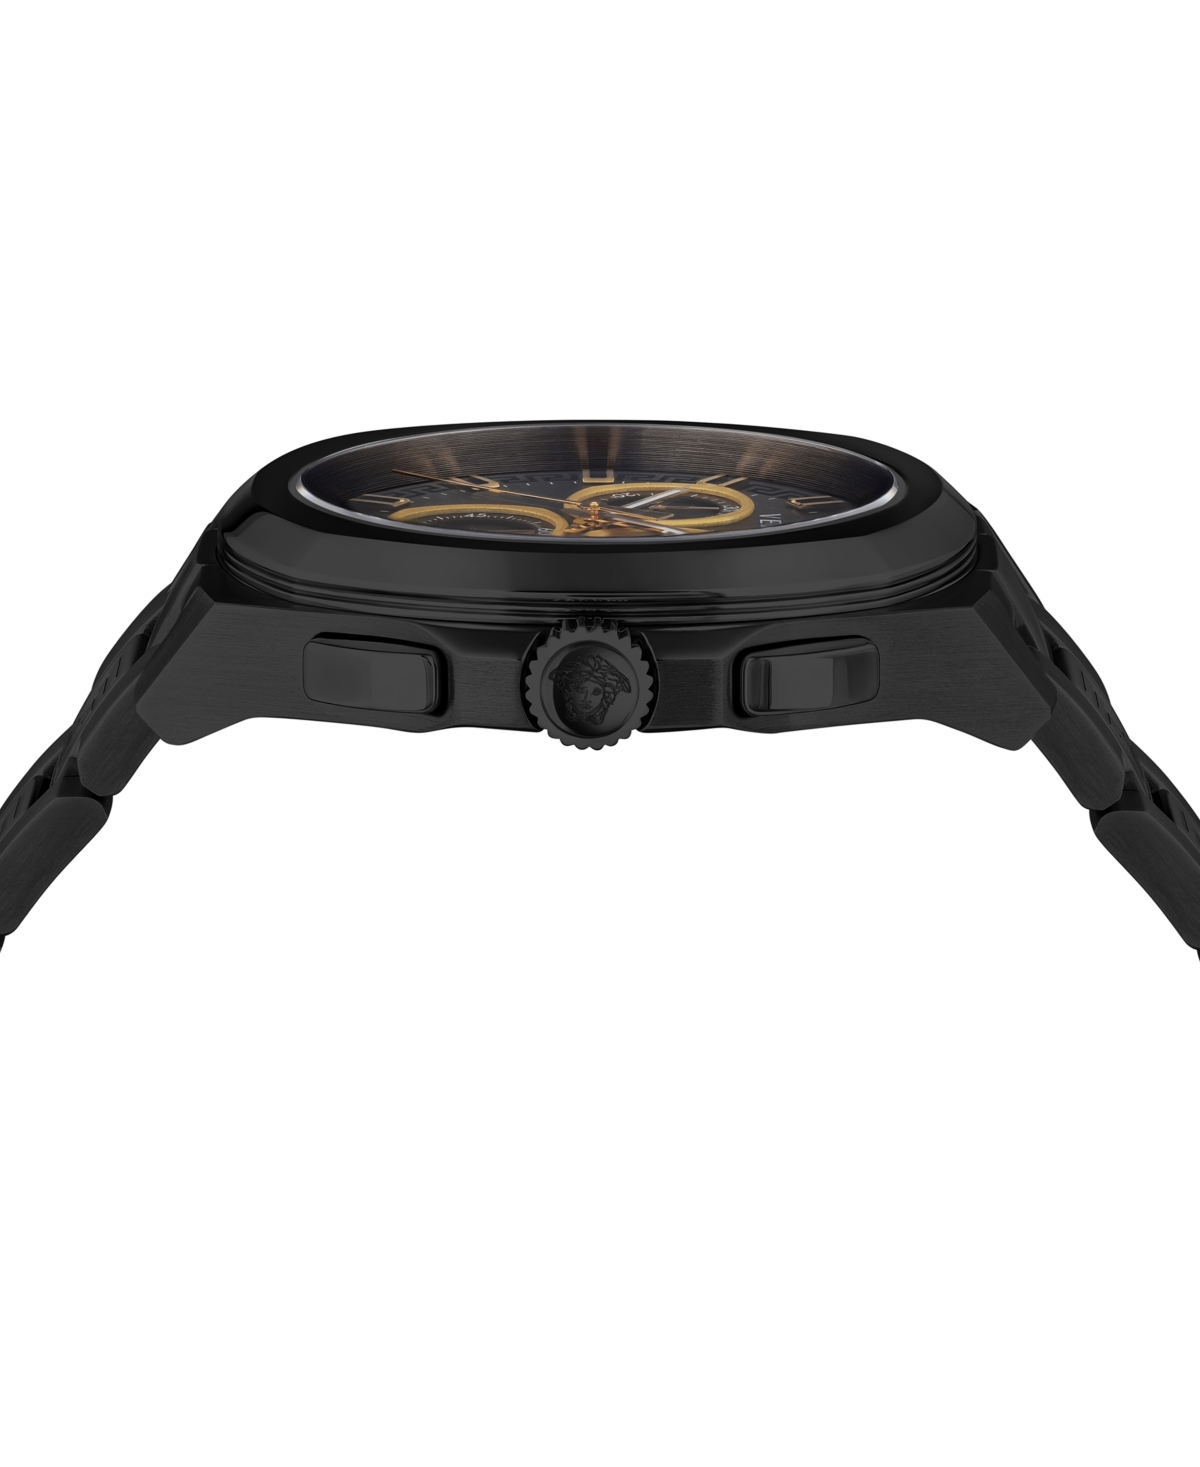 Shop Versace Men's Swiss Chronograph Geo Black Ion-plated Stainless Steel Bracelet Watch 43mm In Ip Black